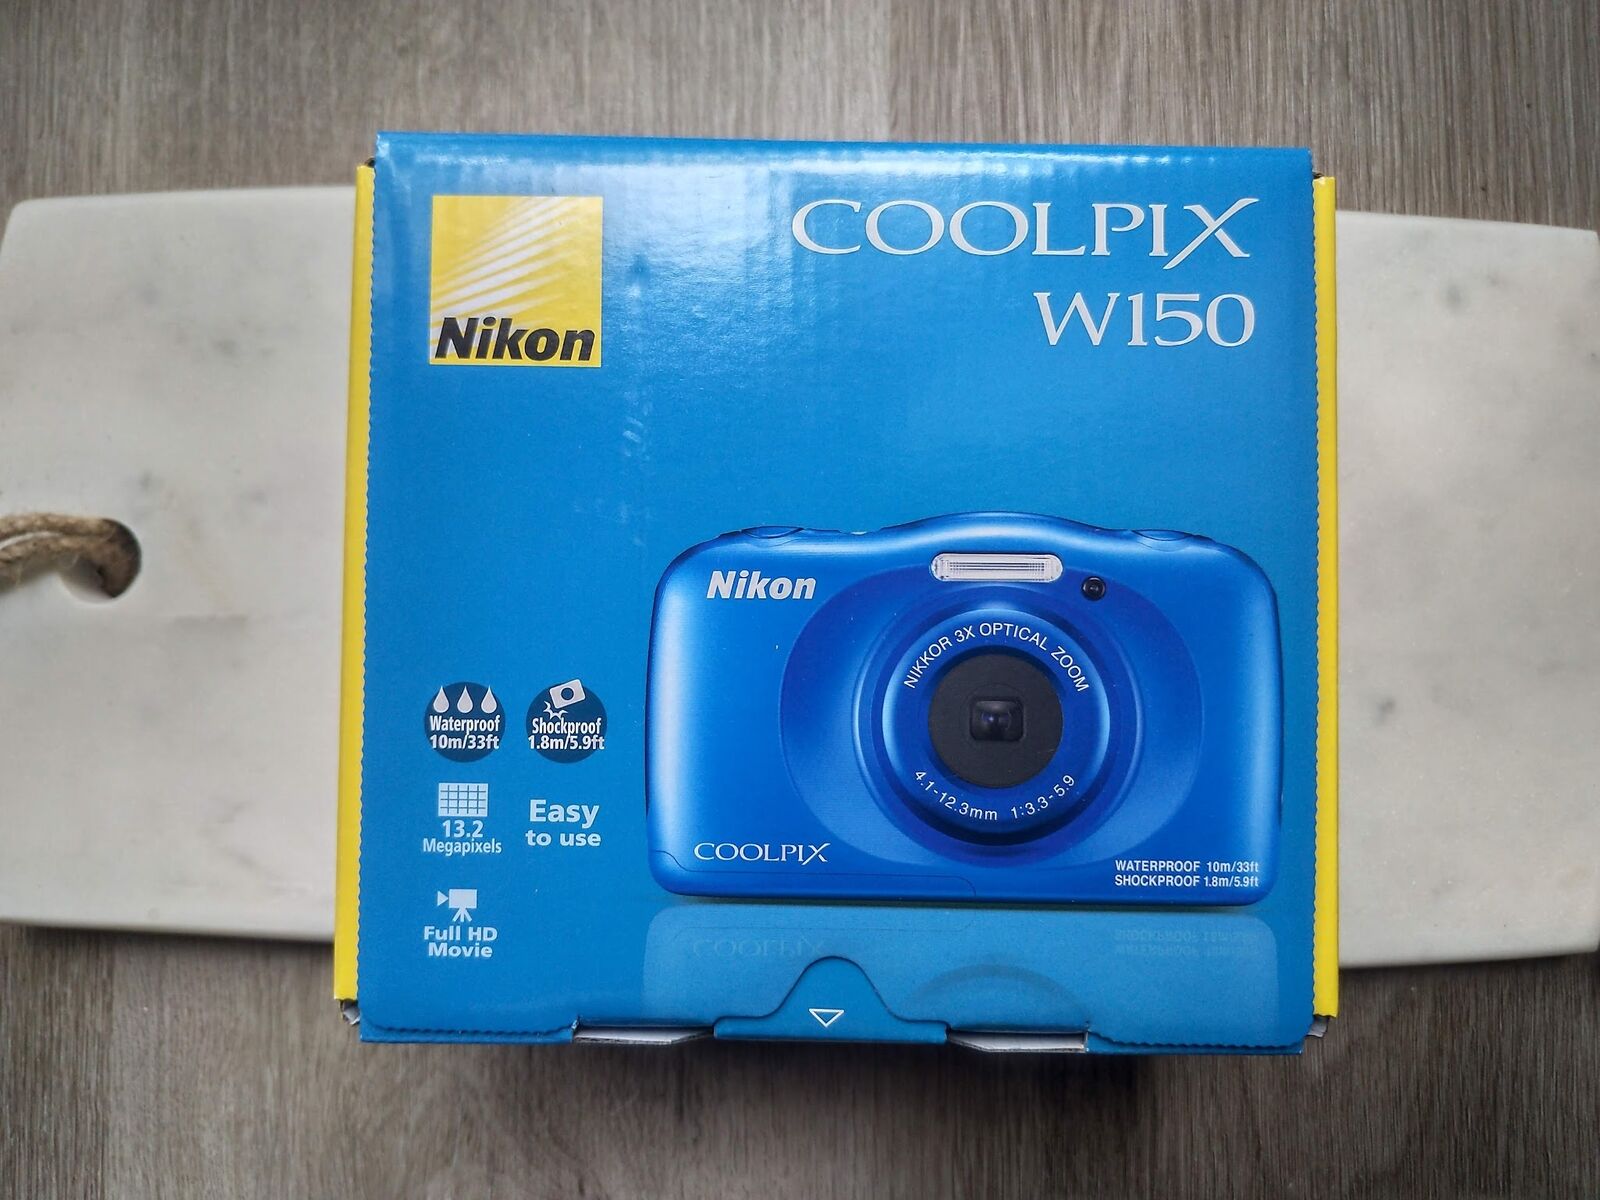 Nikon CoolPix W150 Digital Camera - Shockproof Waterproof Wifi - Blue - New